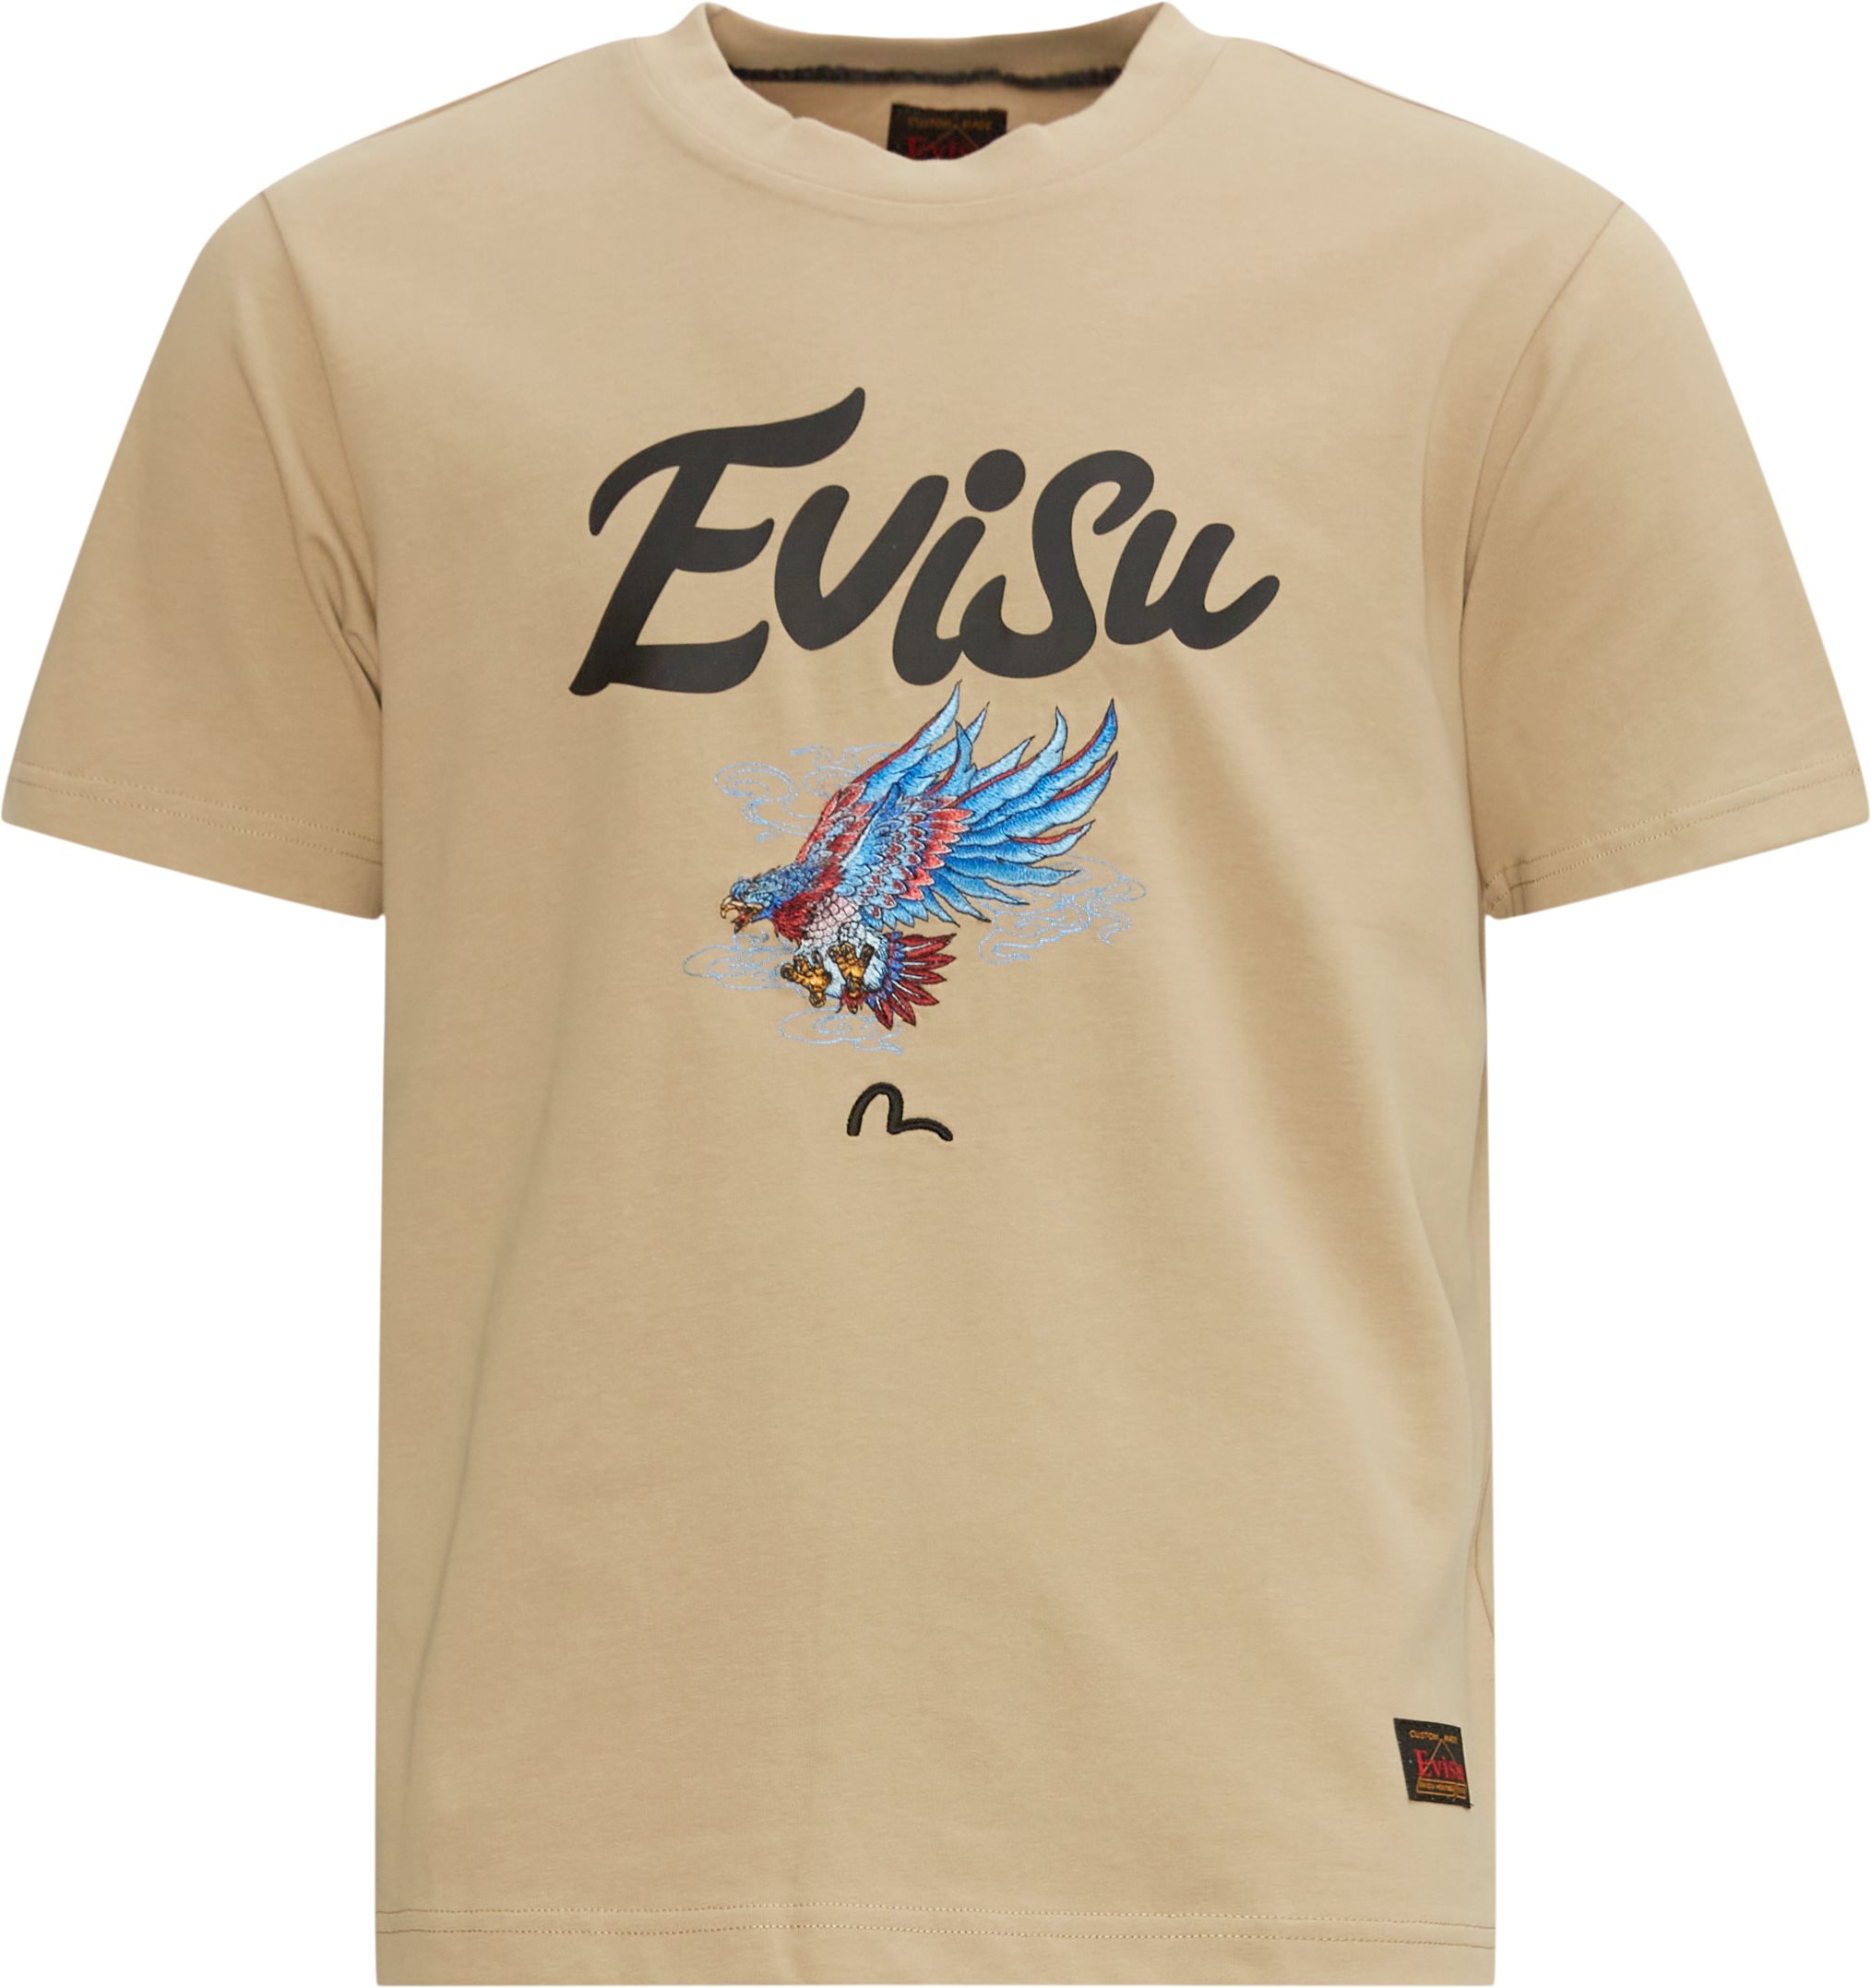 80 EVISU SAND 2ESHTM3TS518XXCTC EUR T-shirts from